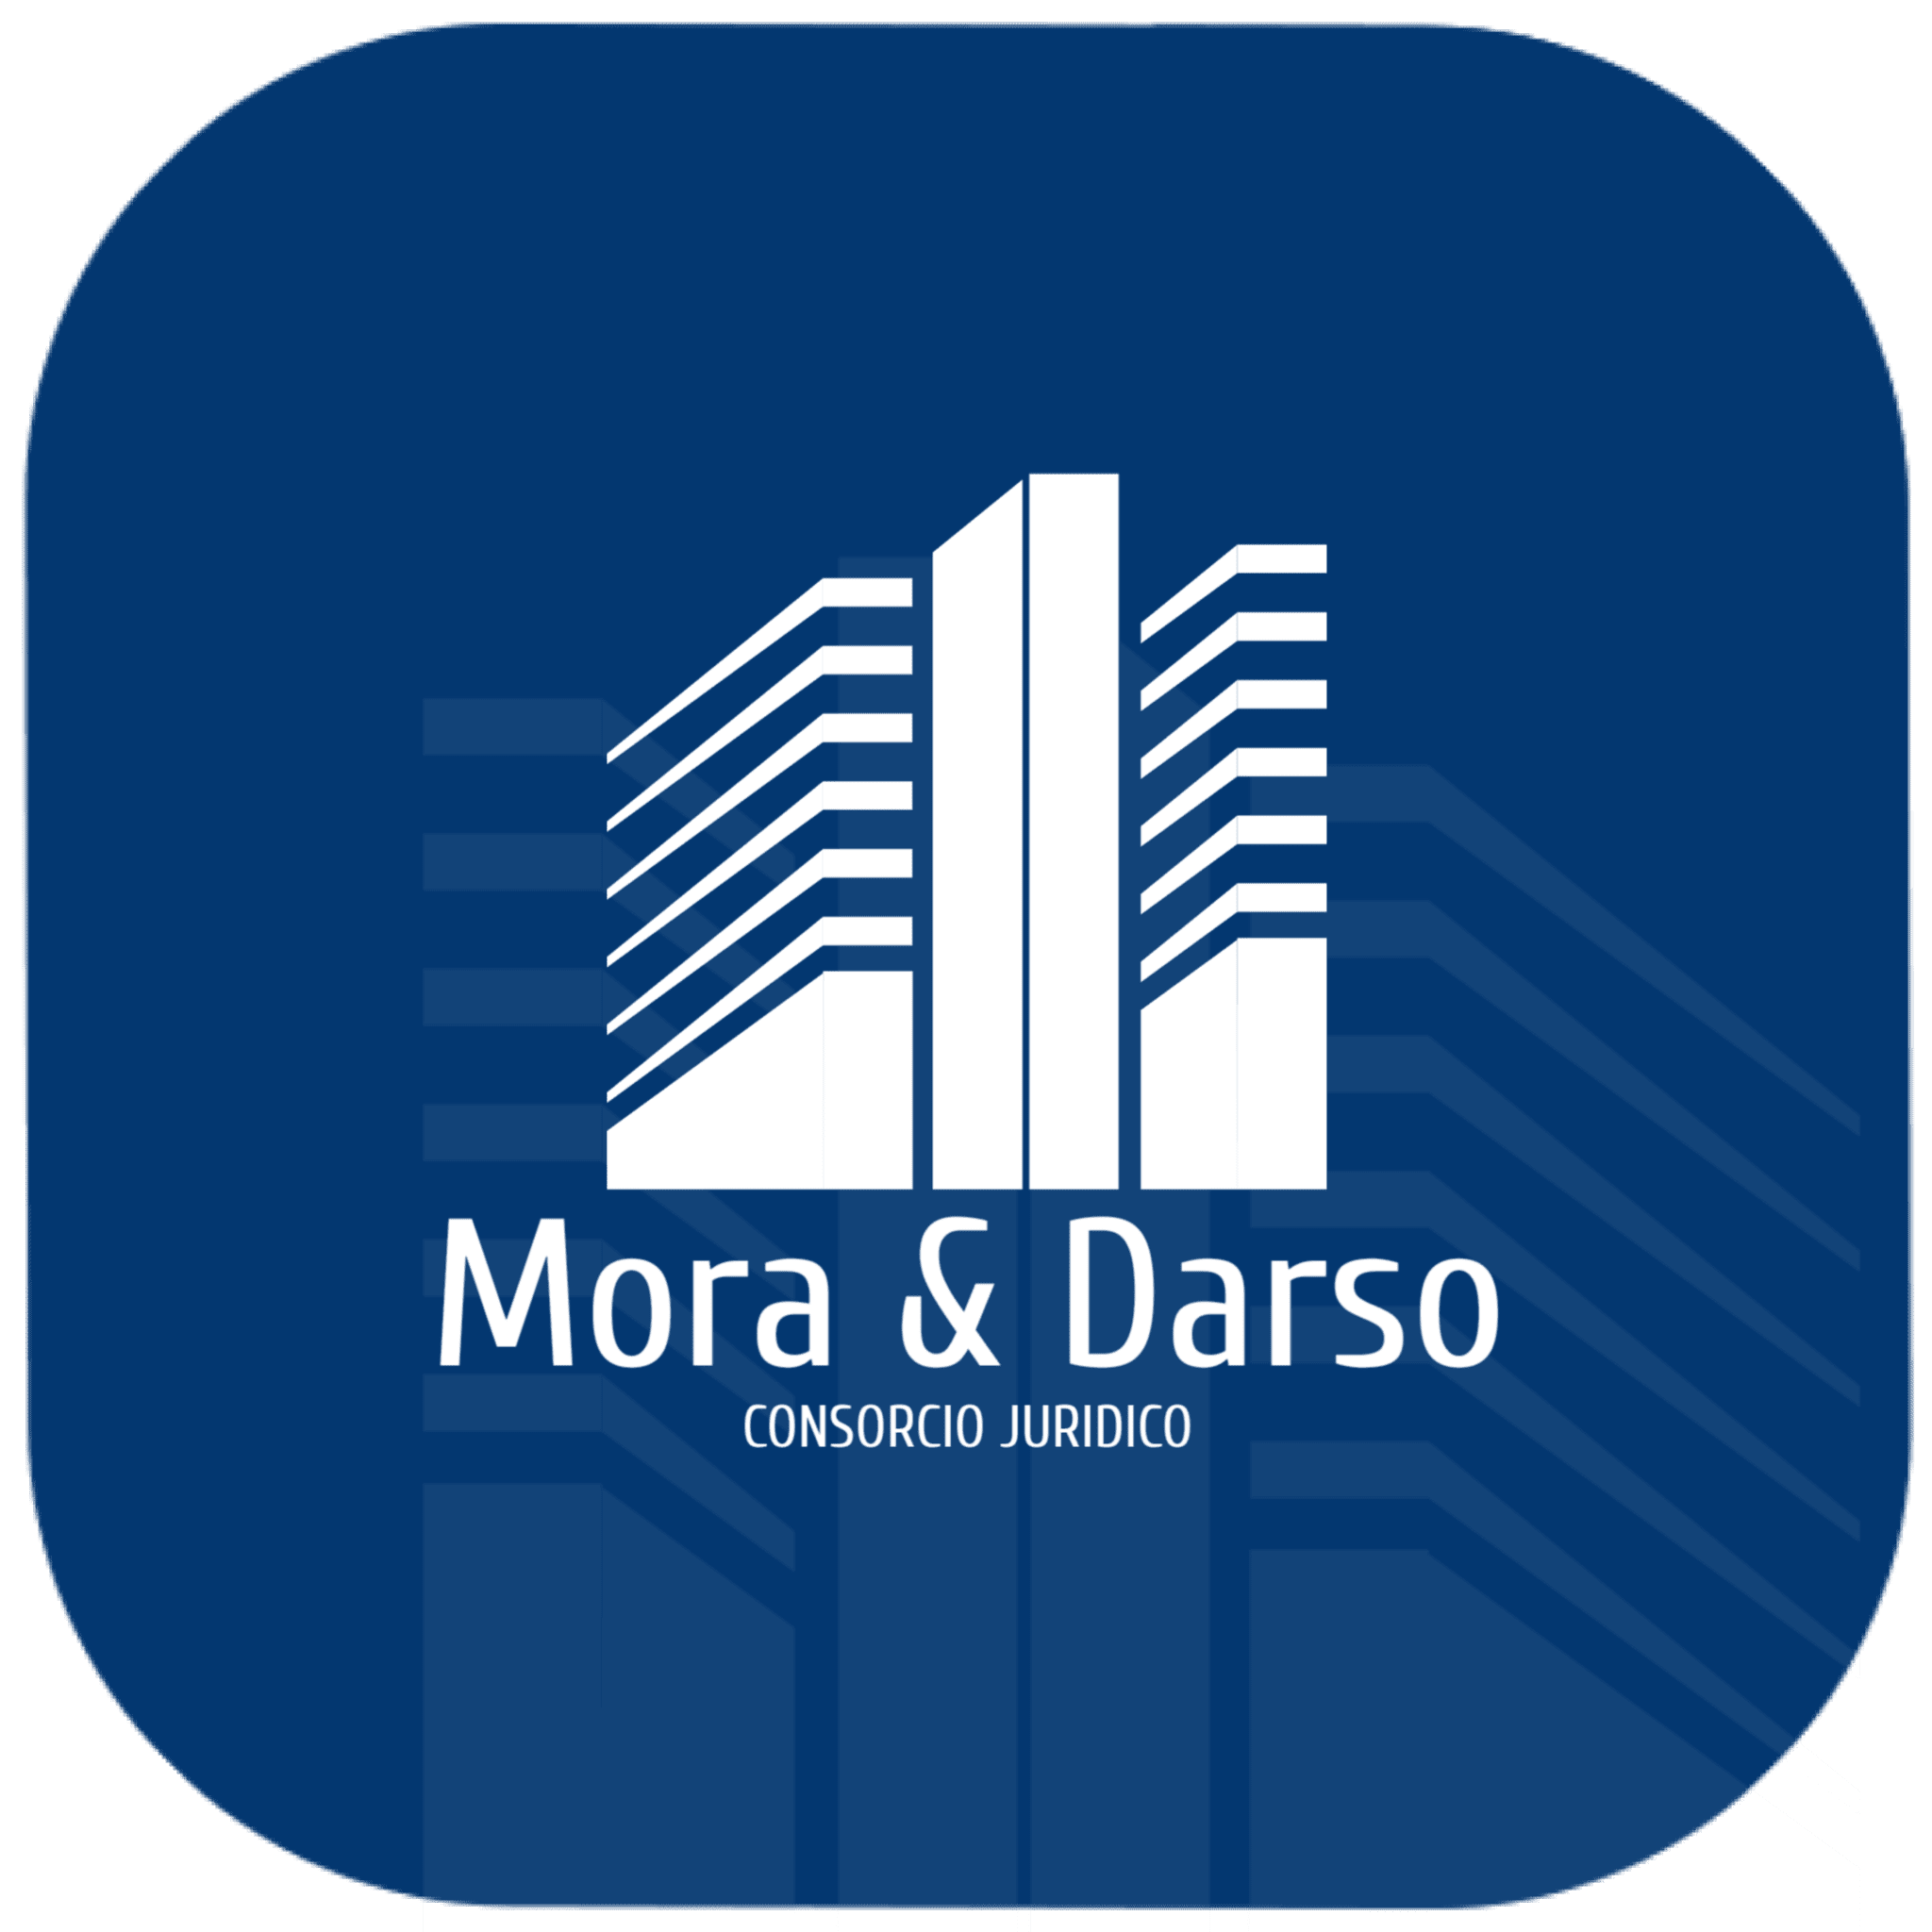 Mora & Darso